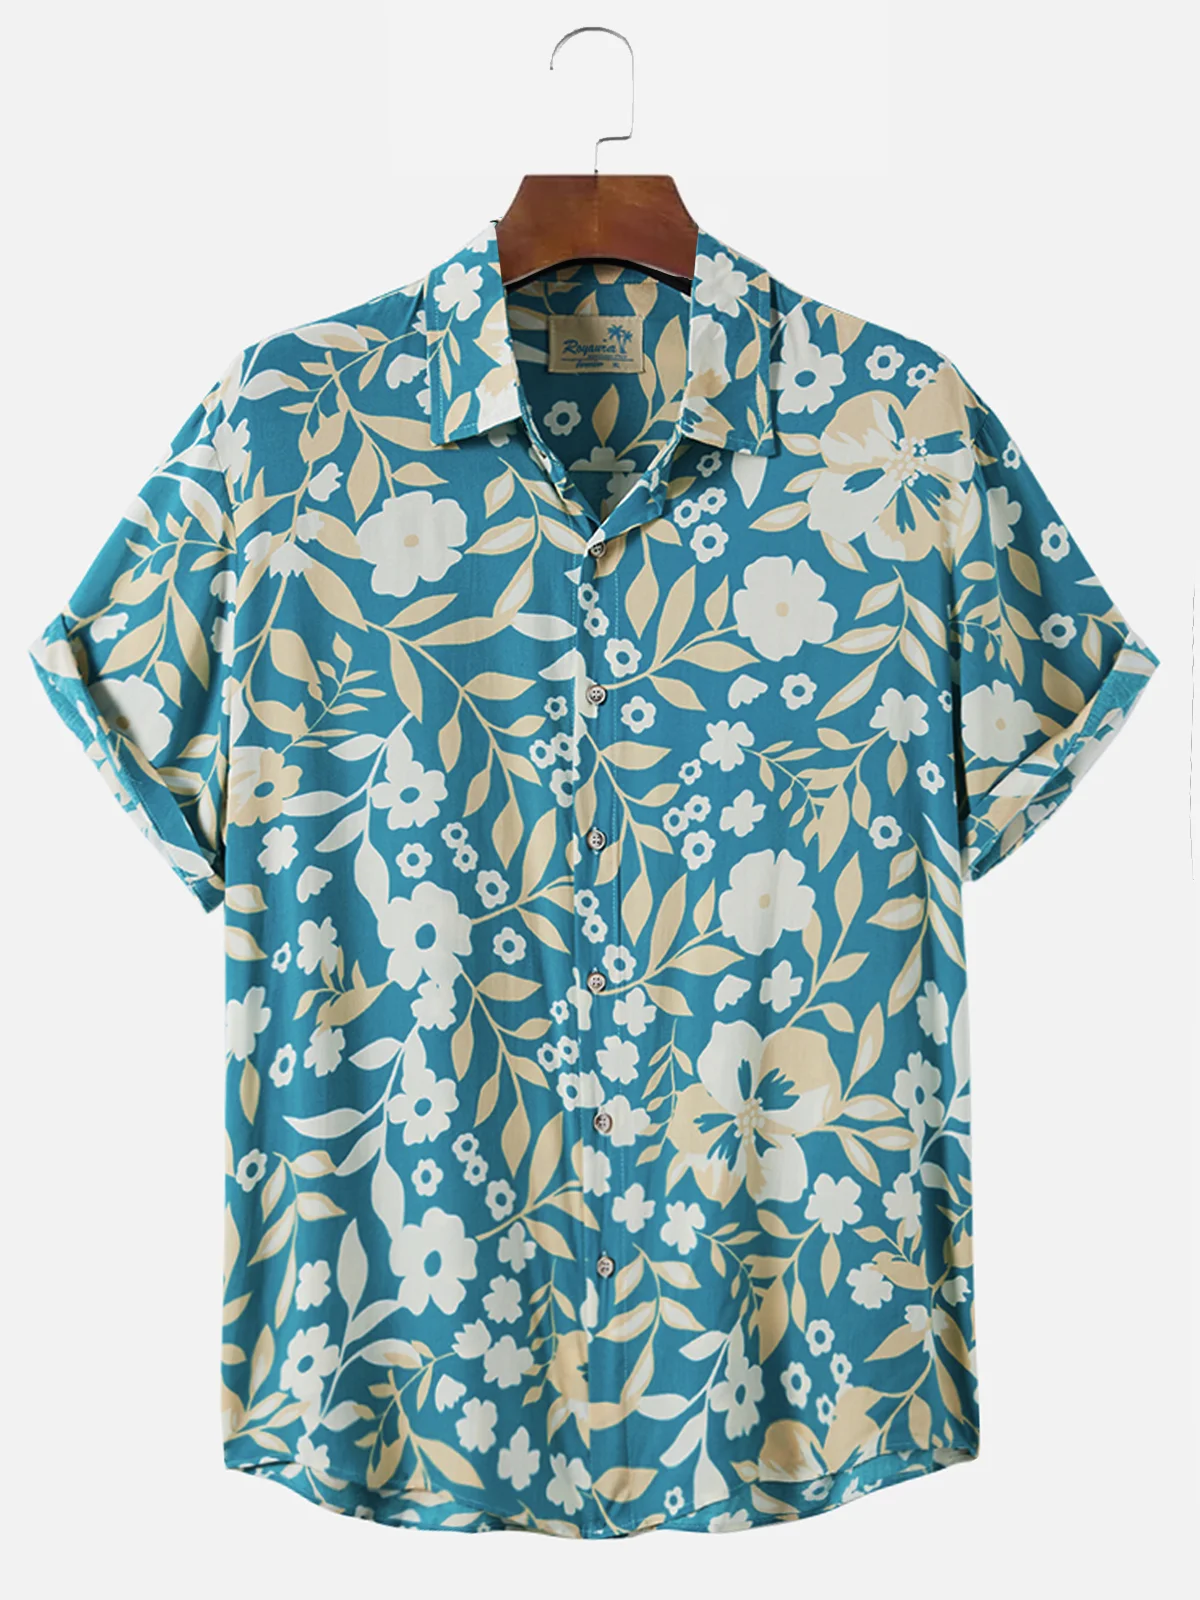 Royaura Cotton Vacation Beach Blue Men's Hawaiian Shirts Comfortable Blend Breathable Aloha Camp Shirts